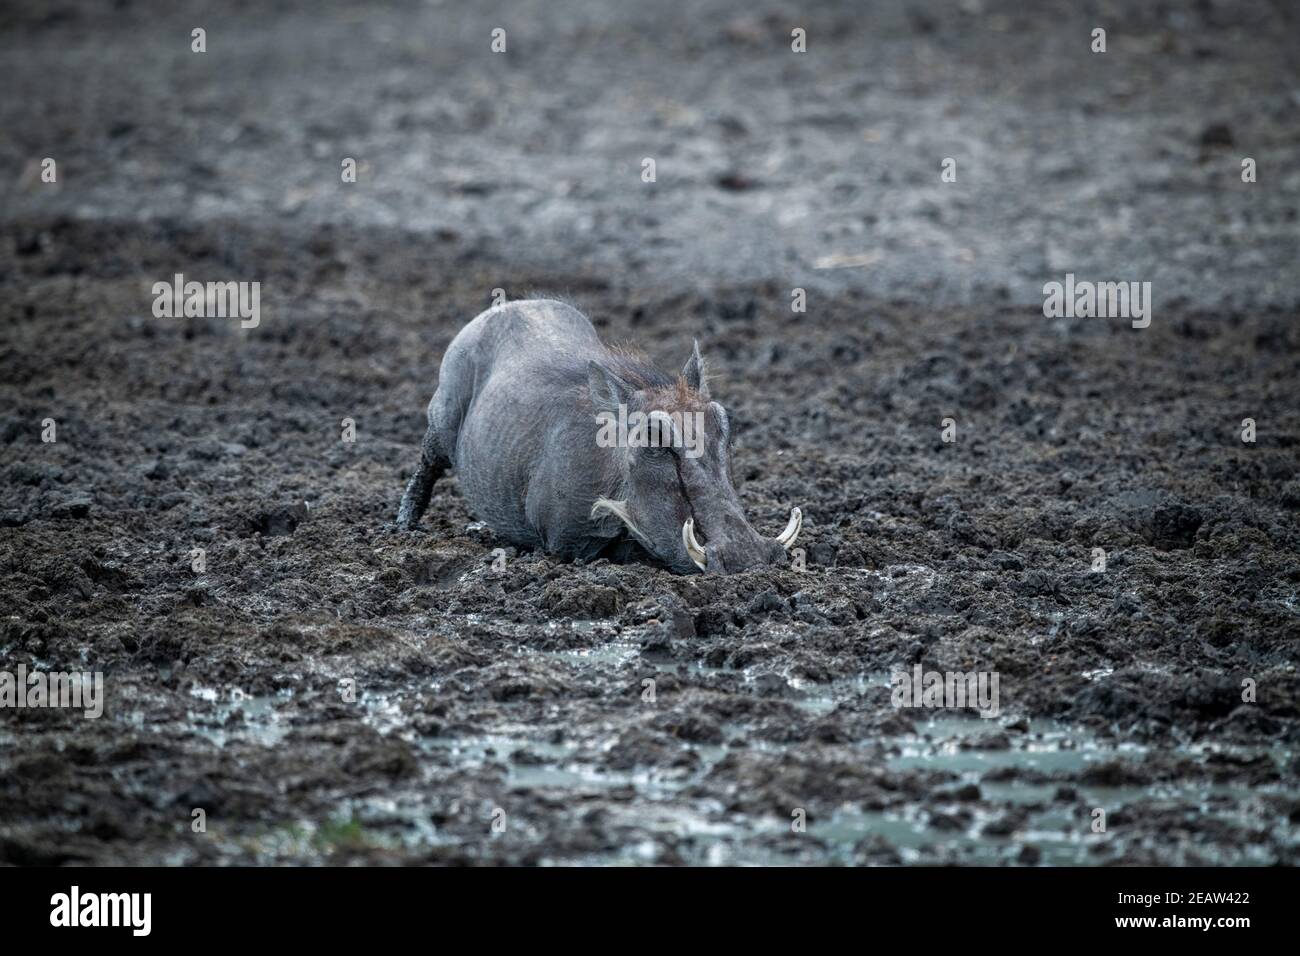 Comune warthog si inginocchia in fango eyeing camera Foto Stock